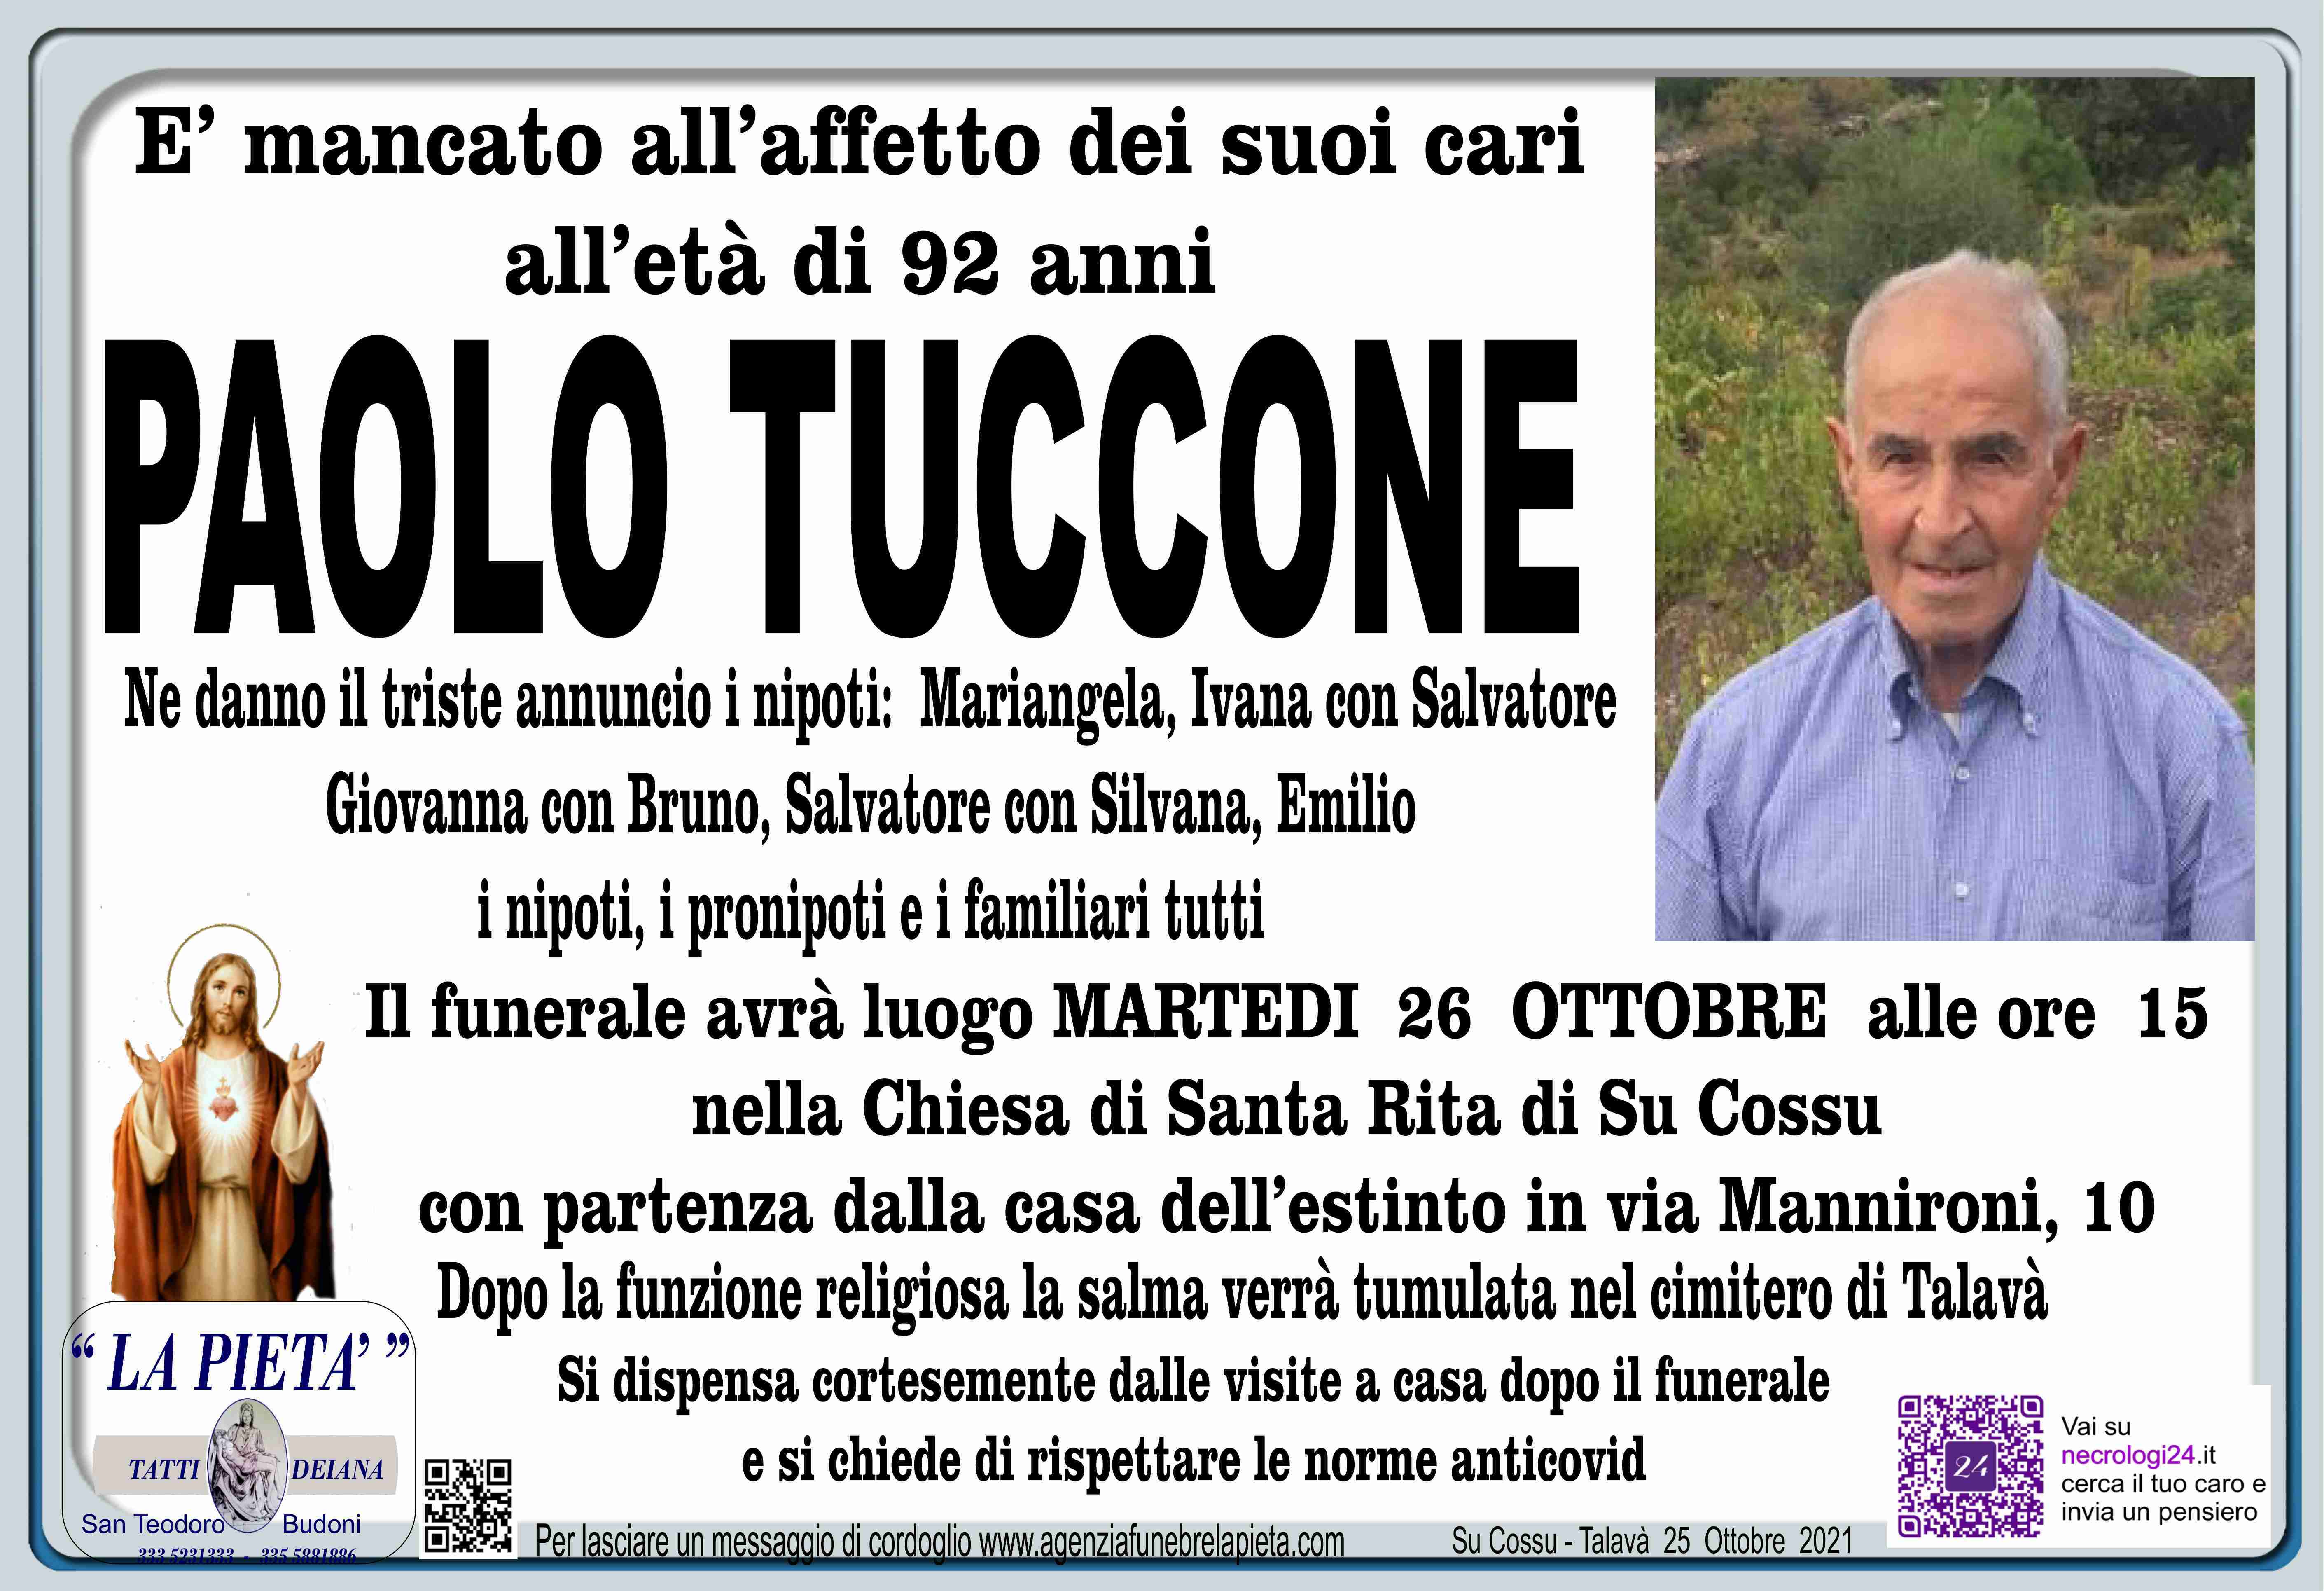 Paolo Tuccone